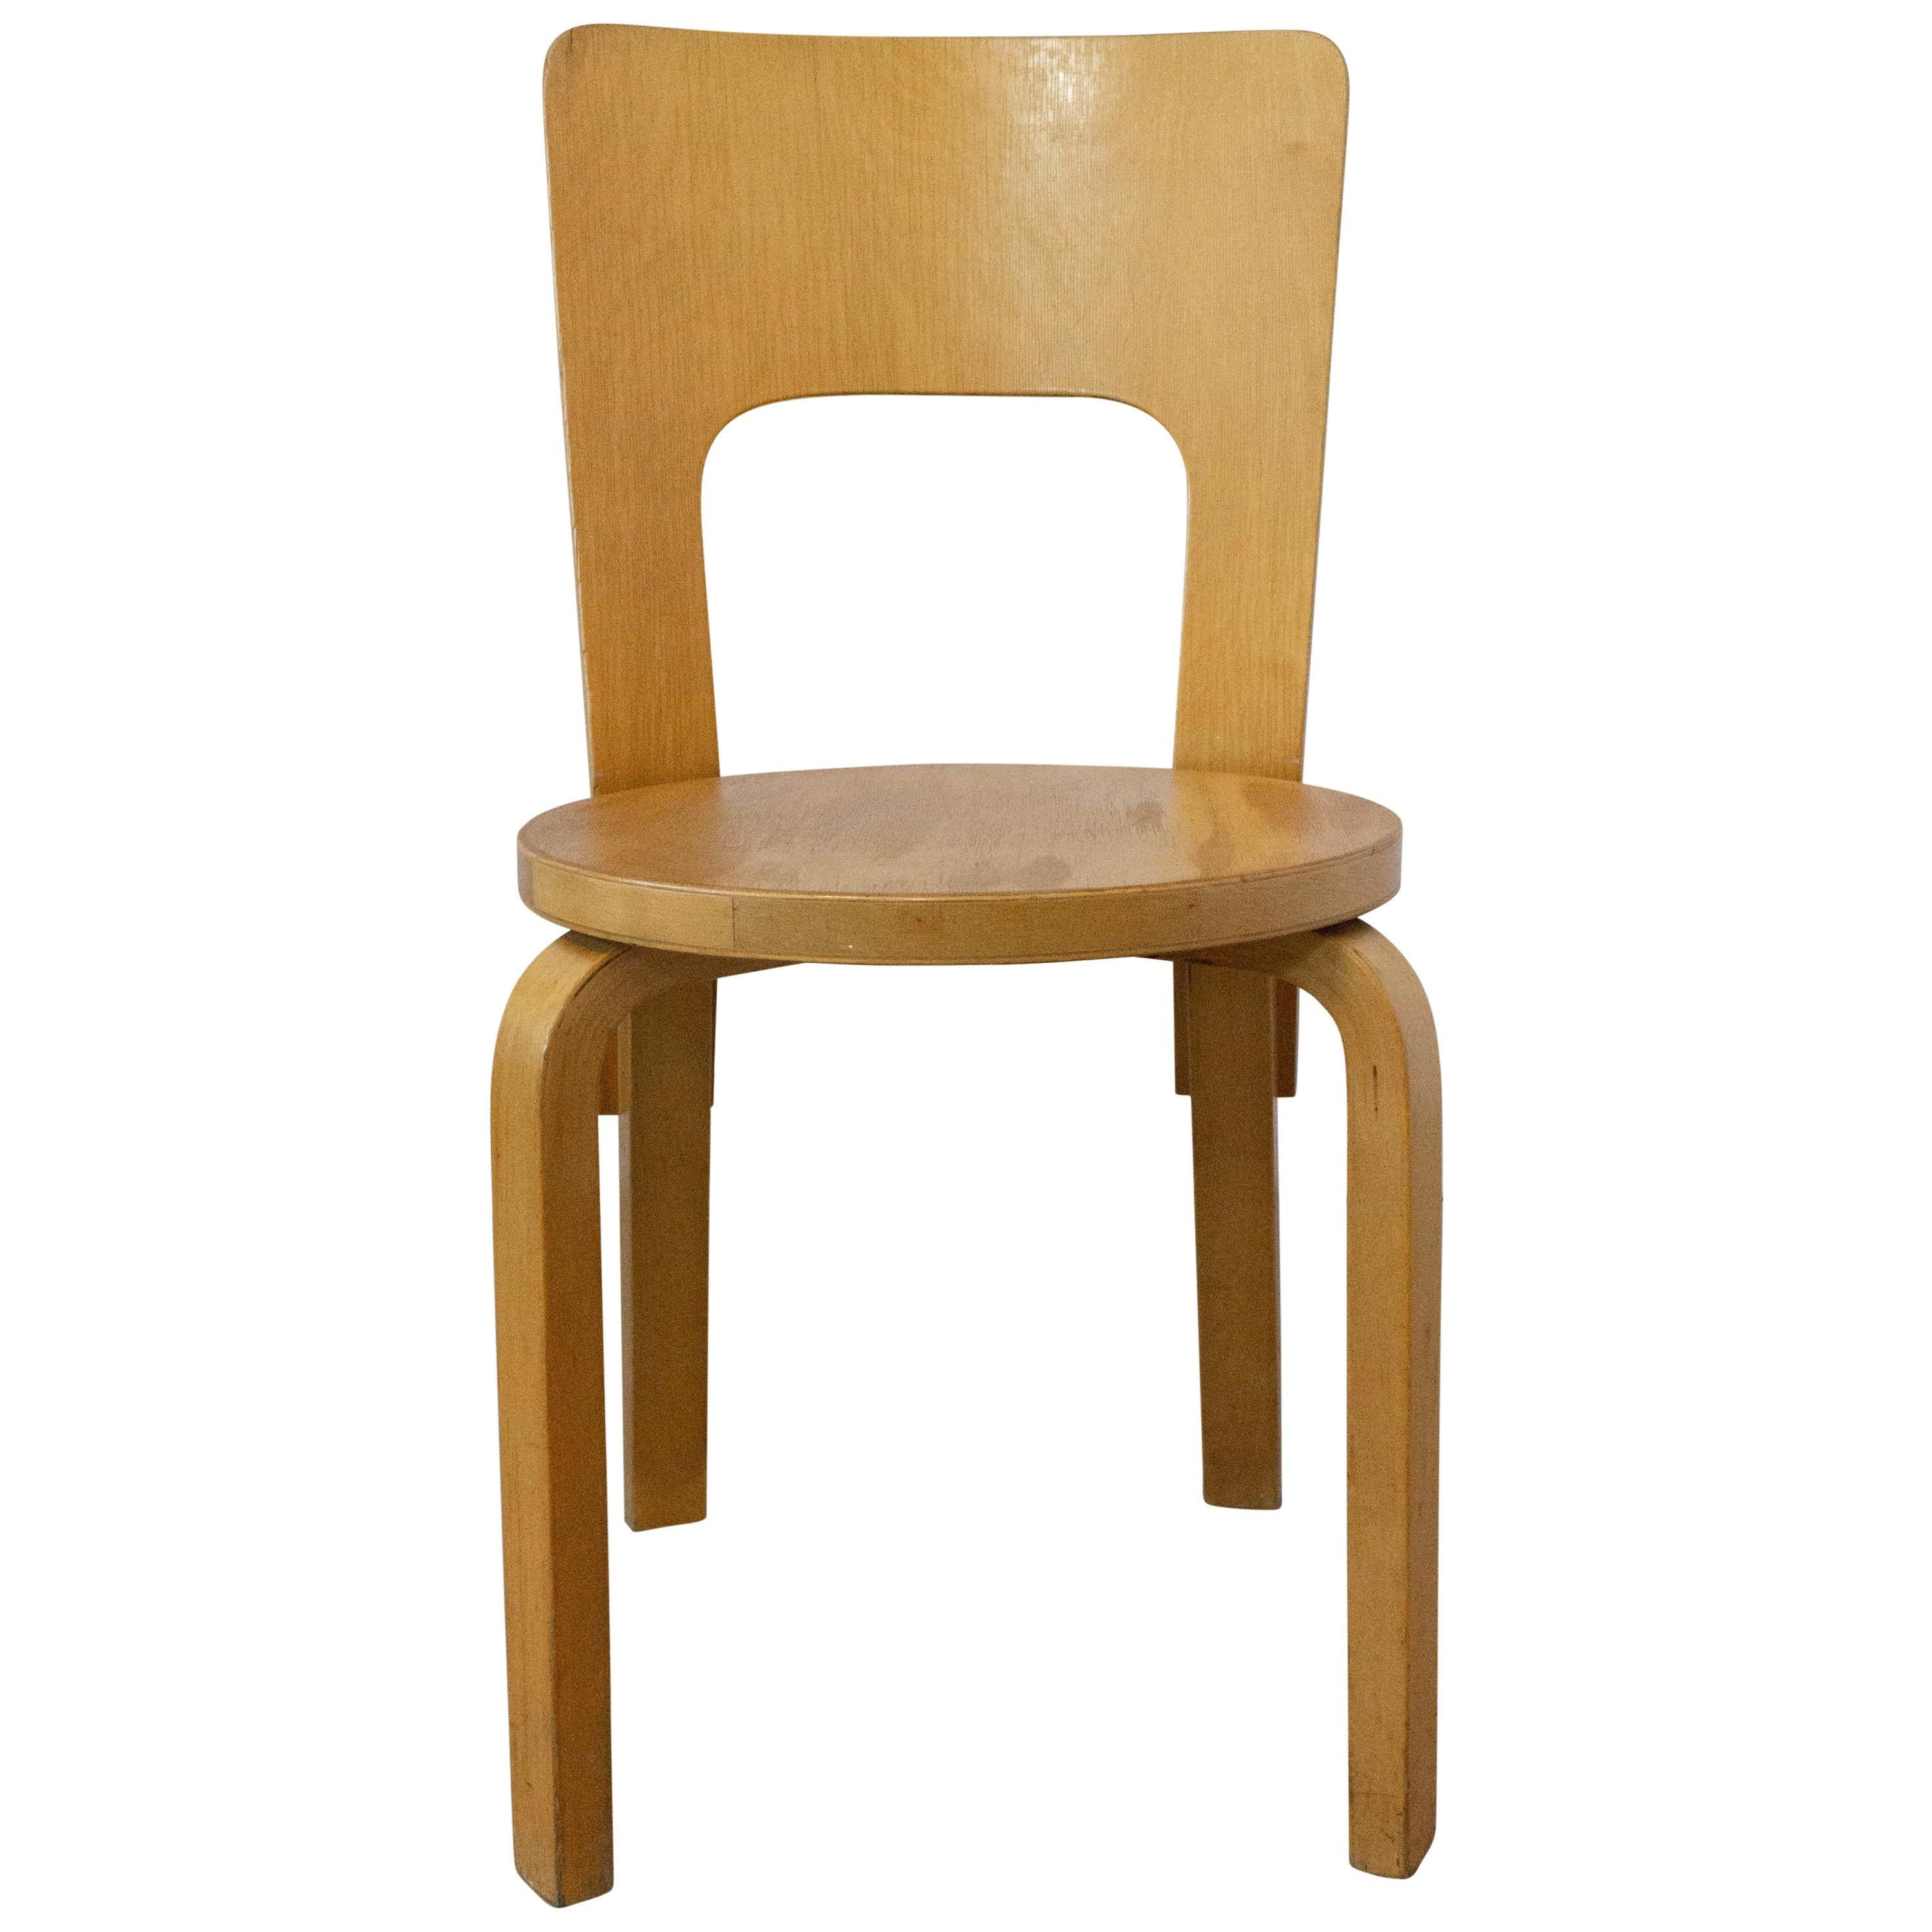 Finnish Vintage Wood Chair Alvar Aalto Model 66, circa 1930